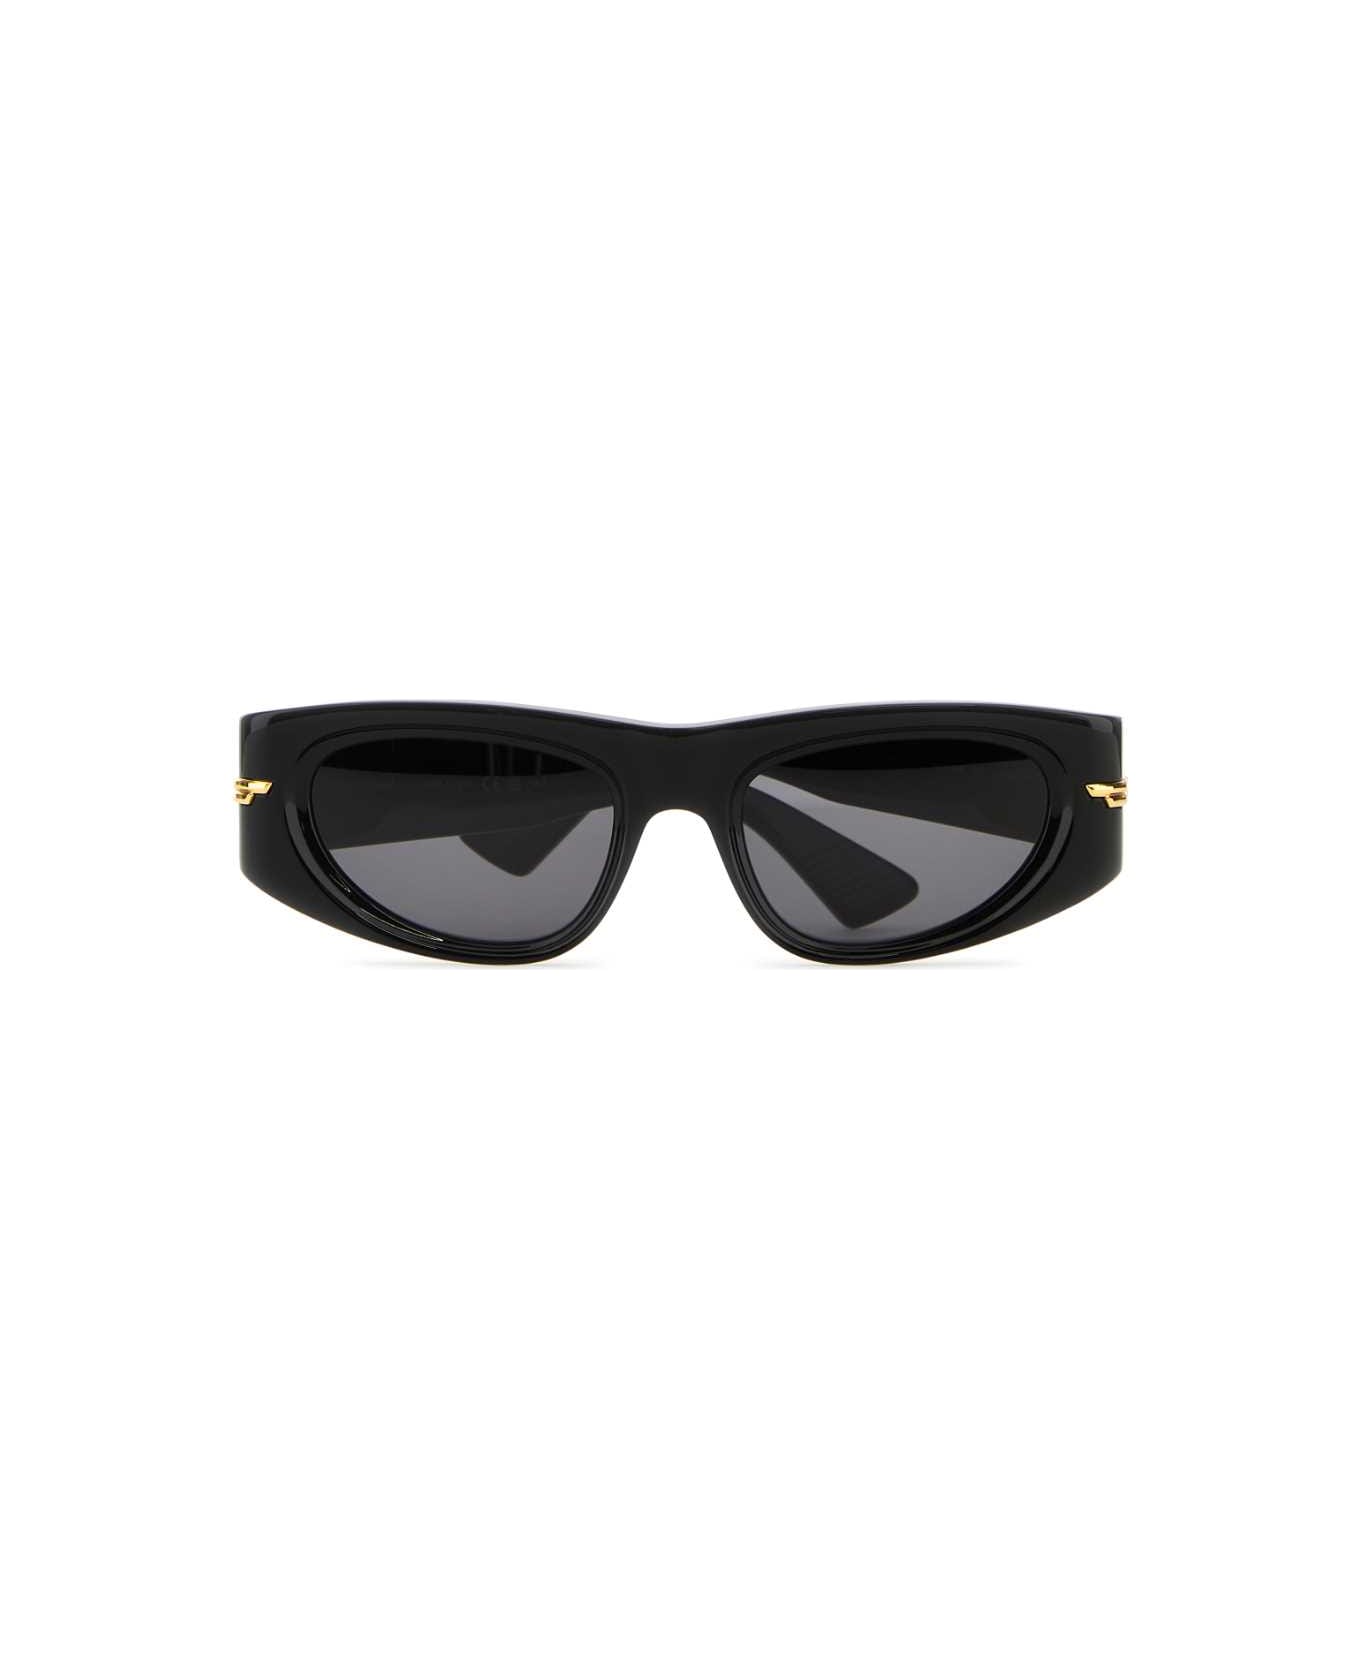 Bottega Veneta Black Acetate Sunglasses - 1049 サングラス